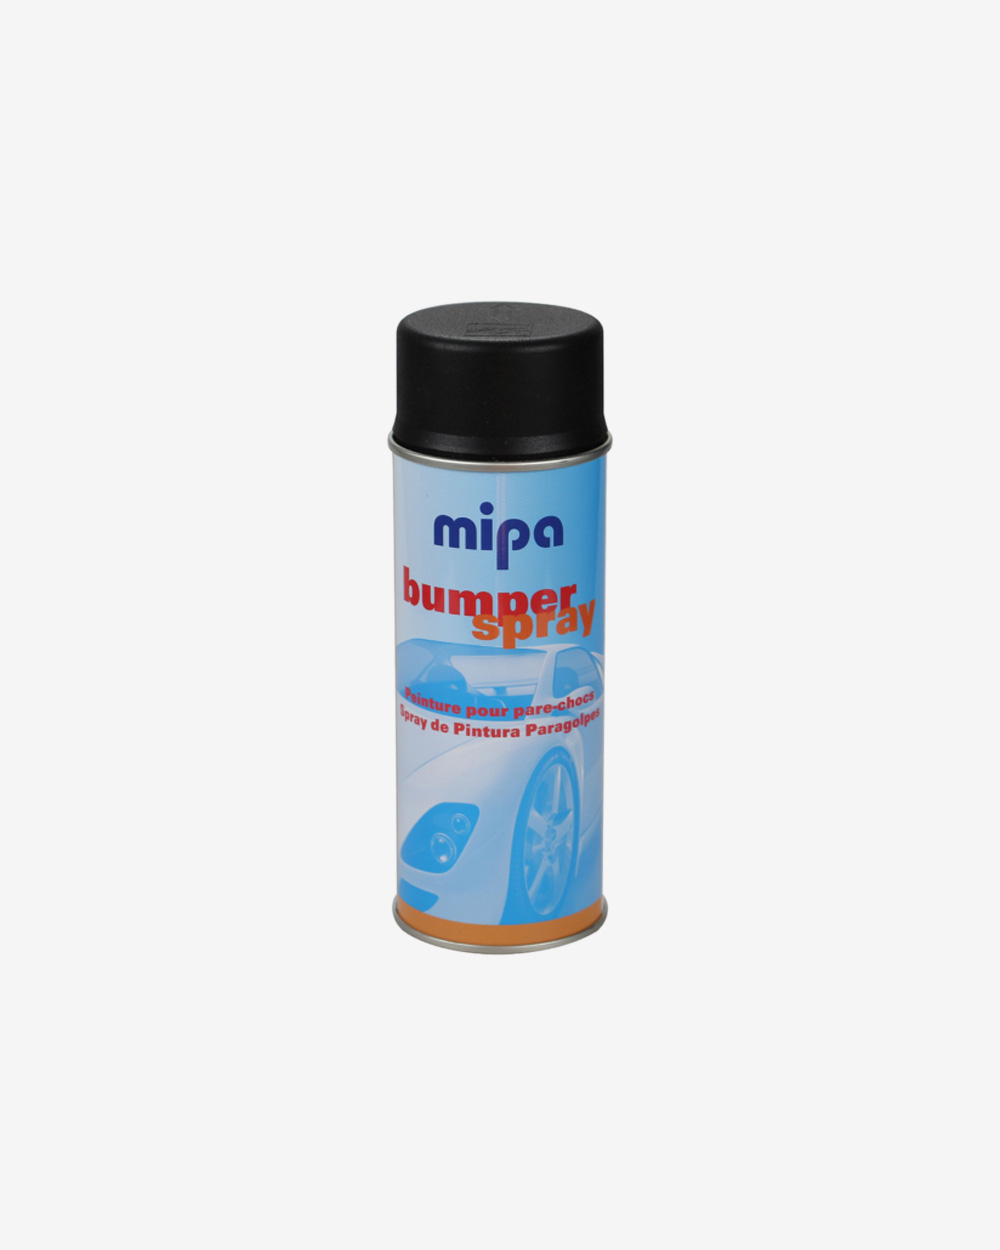 Se Mipa Bumper Spray hos Picment.dk